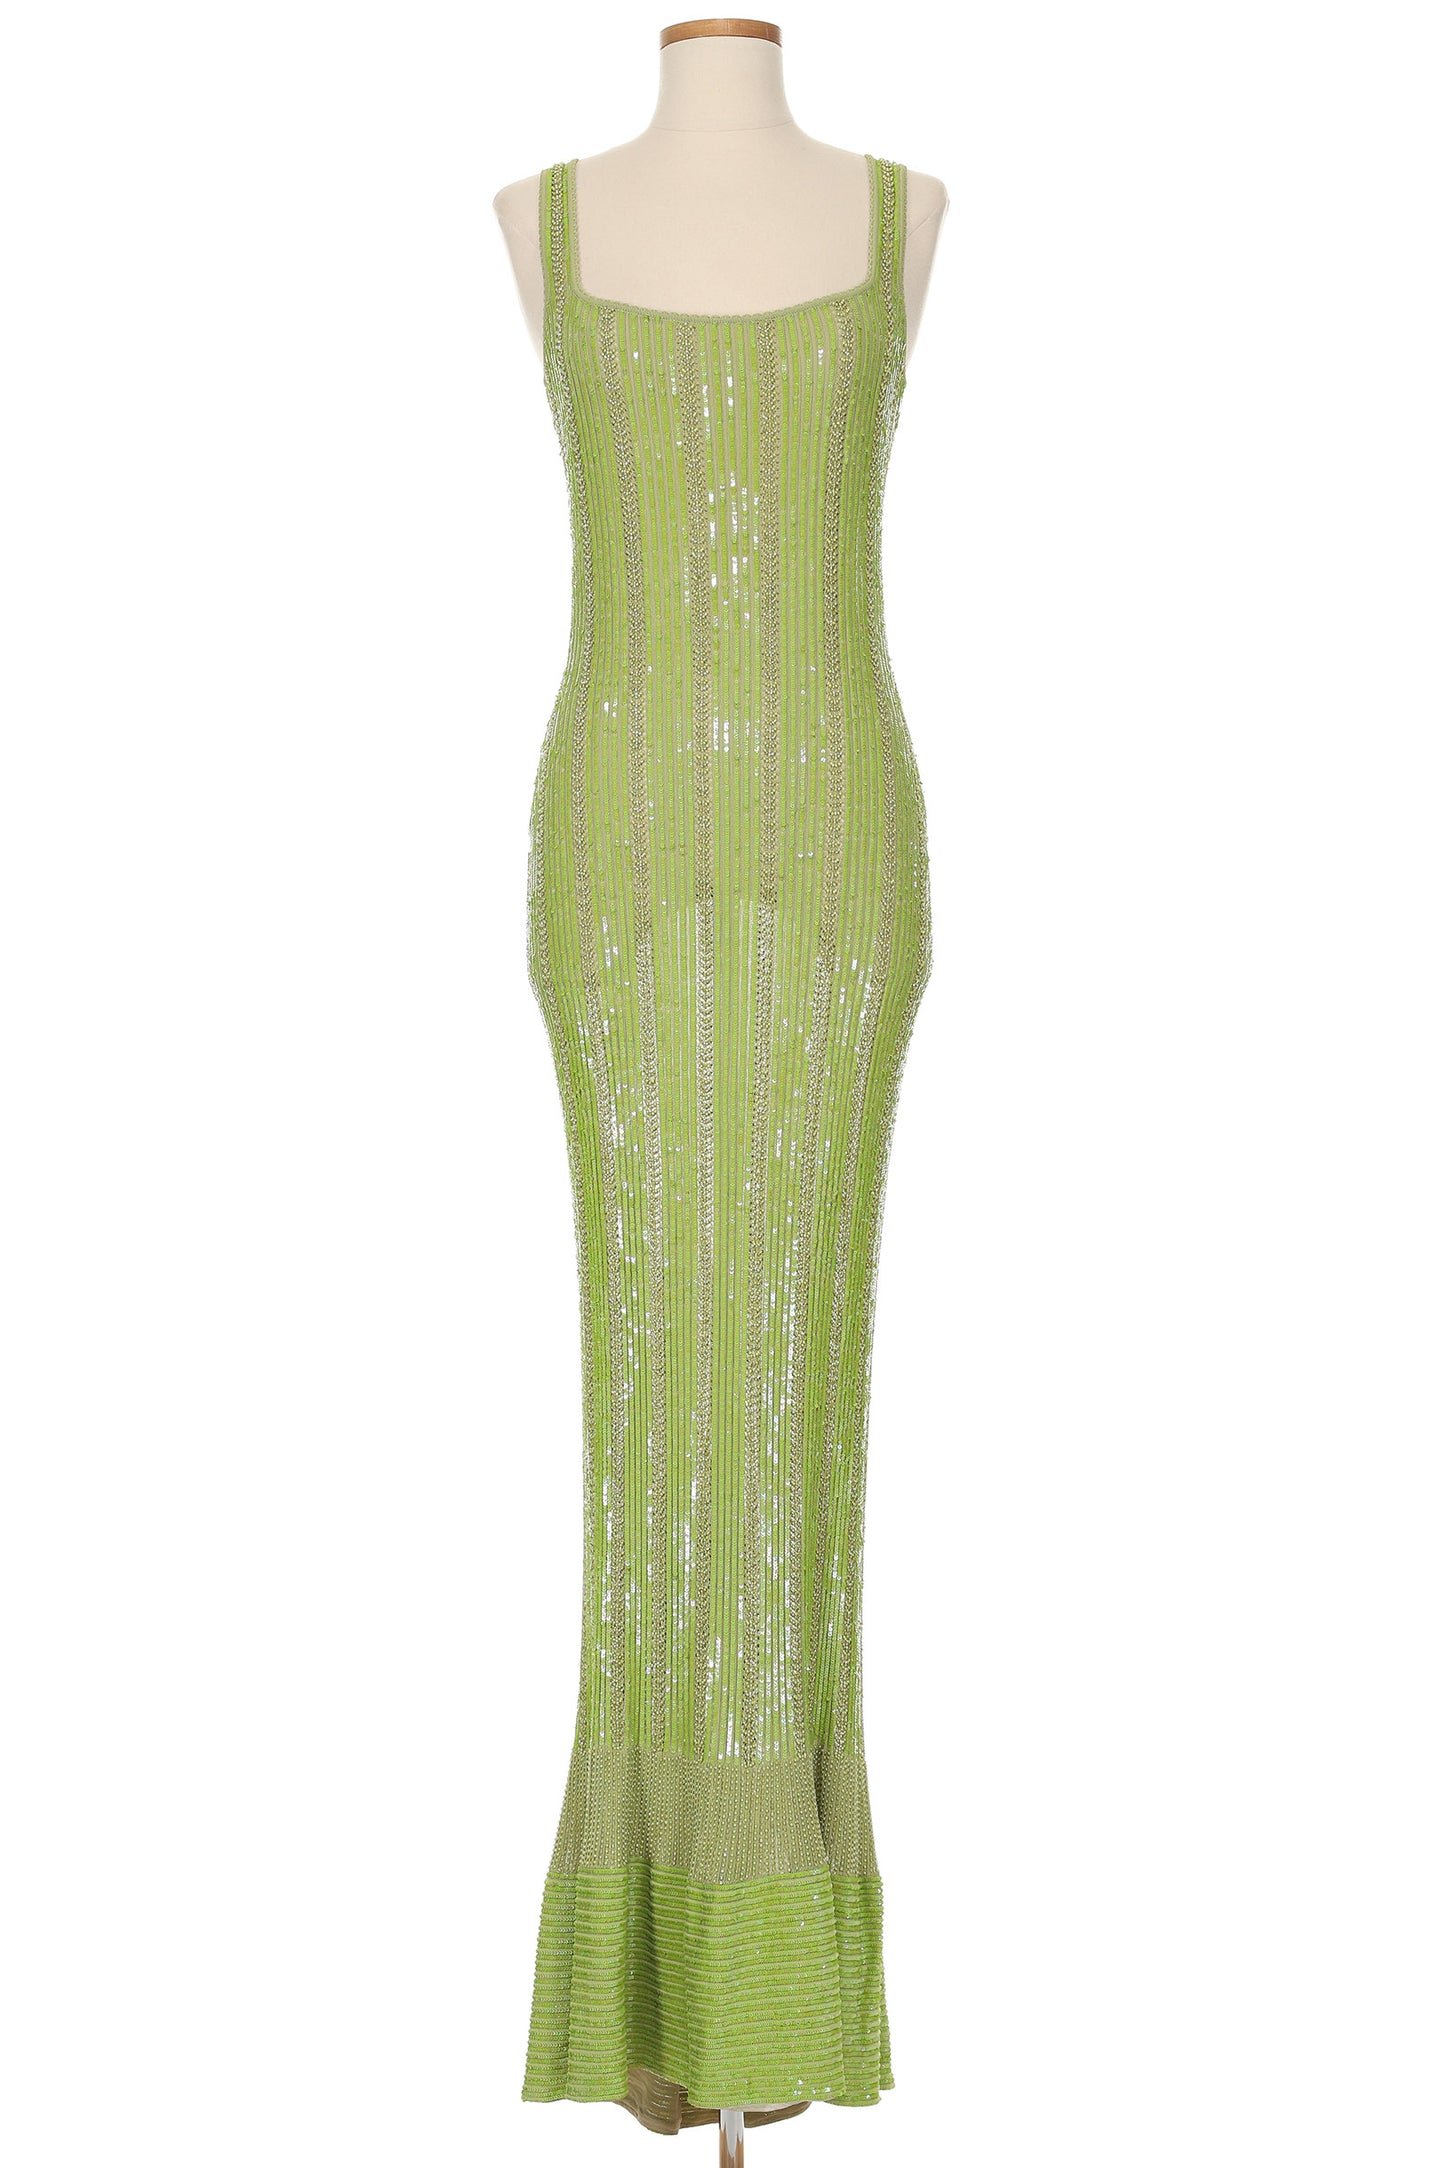 Alaia S/S 1996 Green Beaded Dress